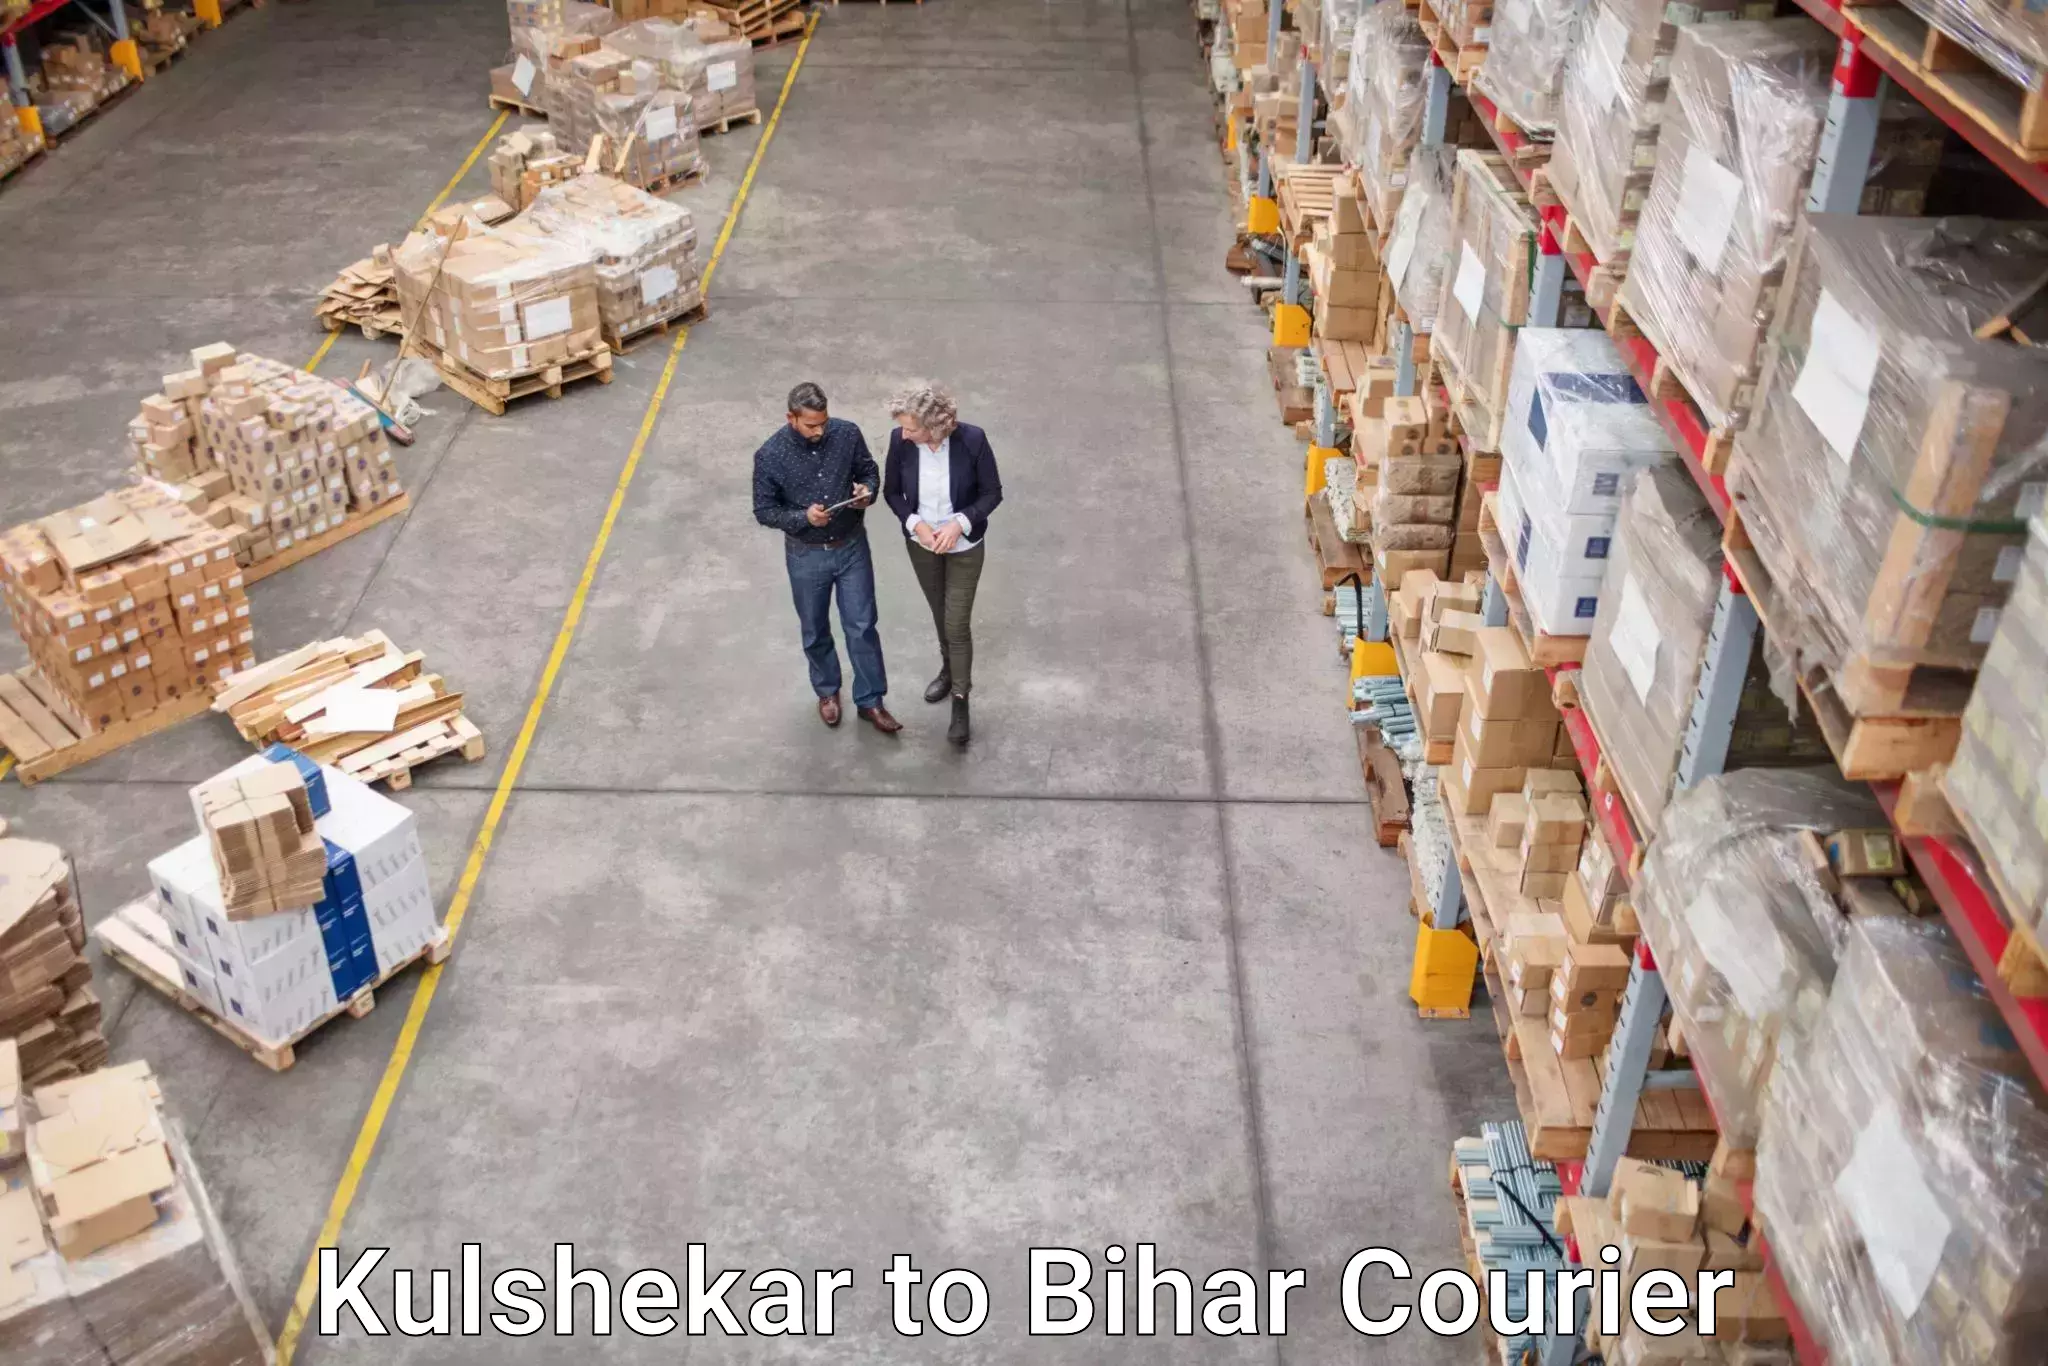 Courier service booking Kulshekar to Bagaha